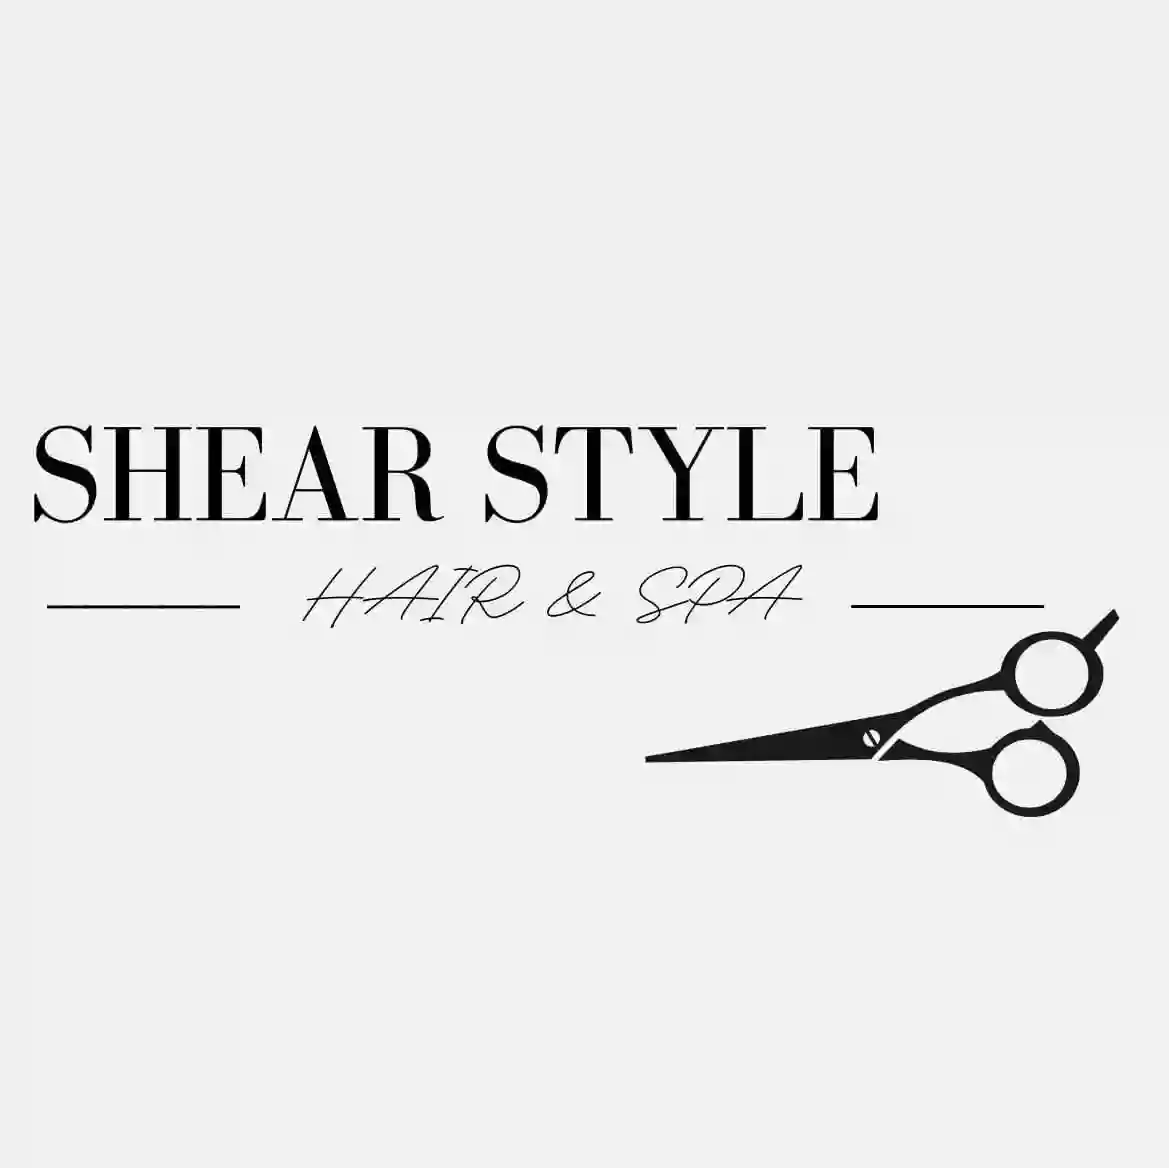 Shear Style Hair & Spa